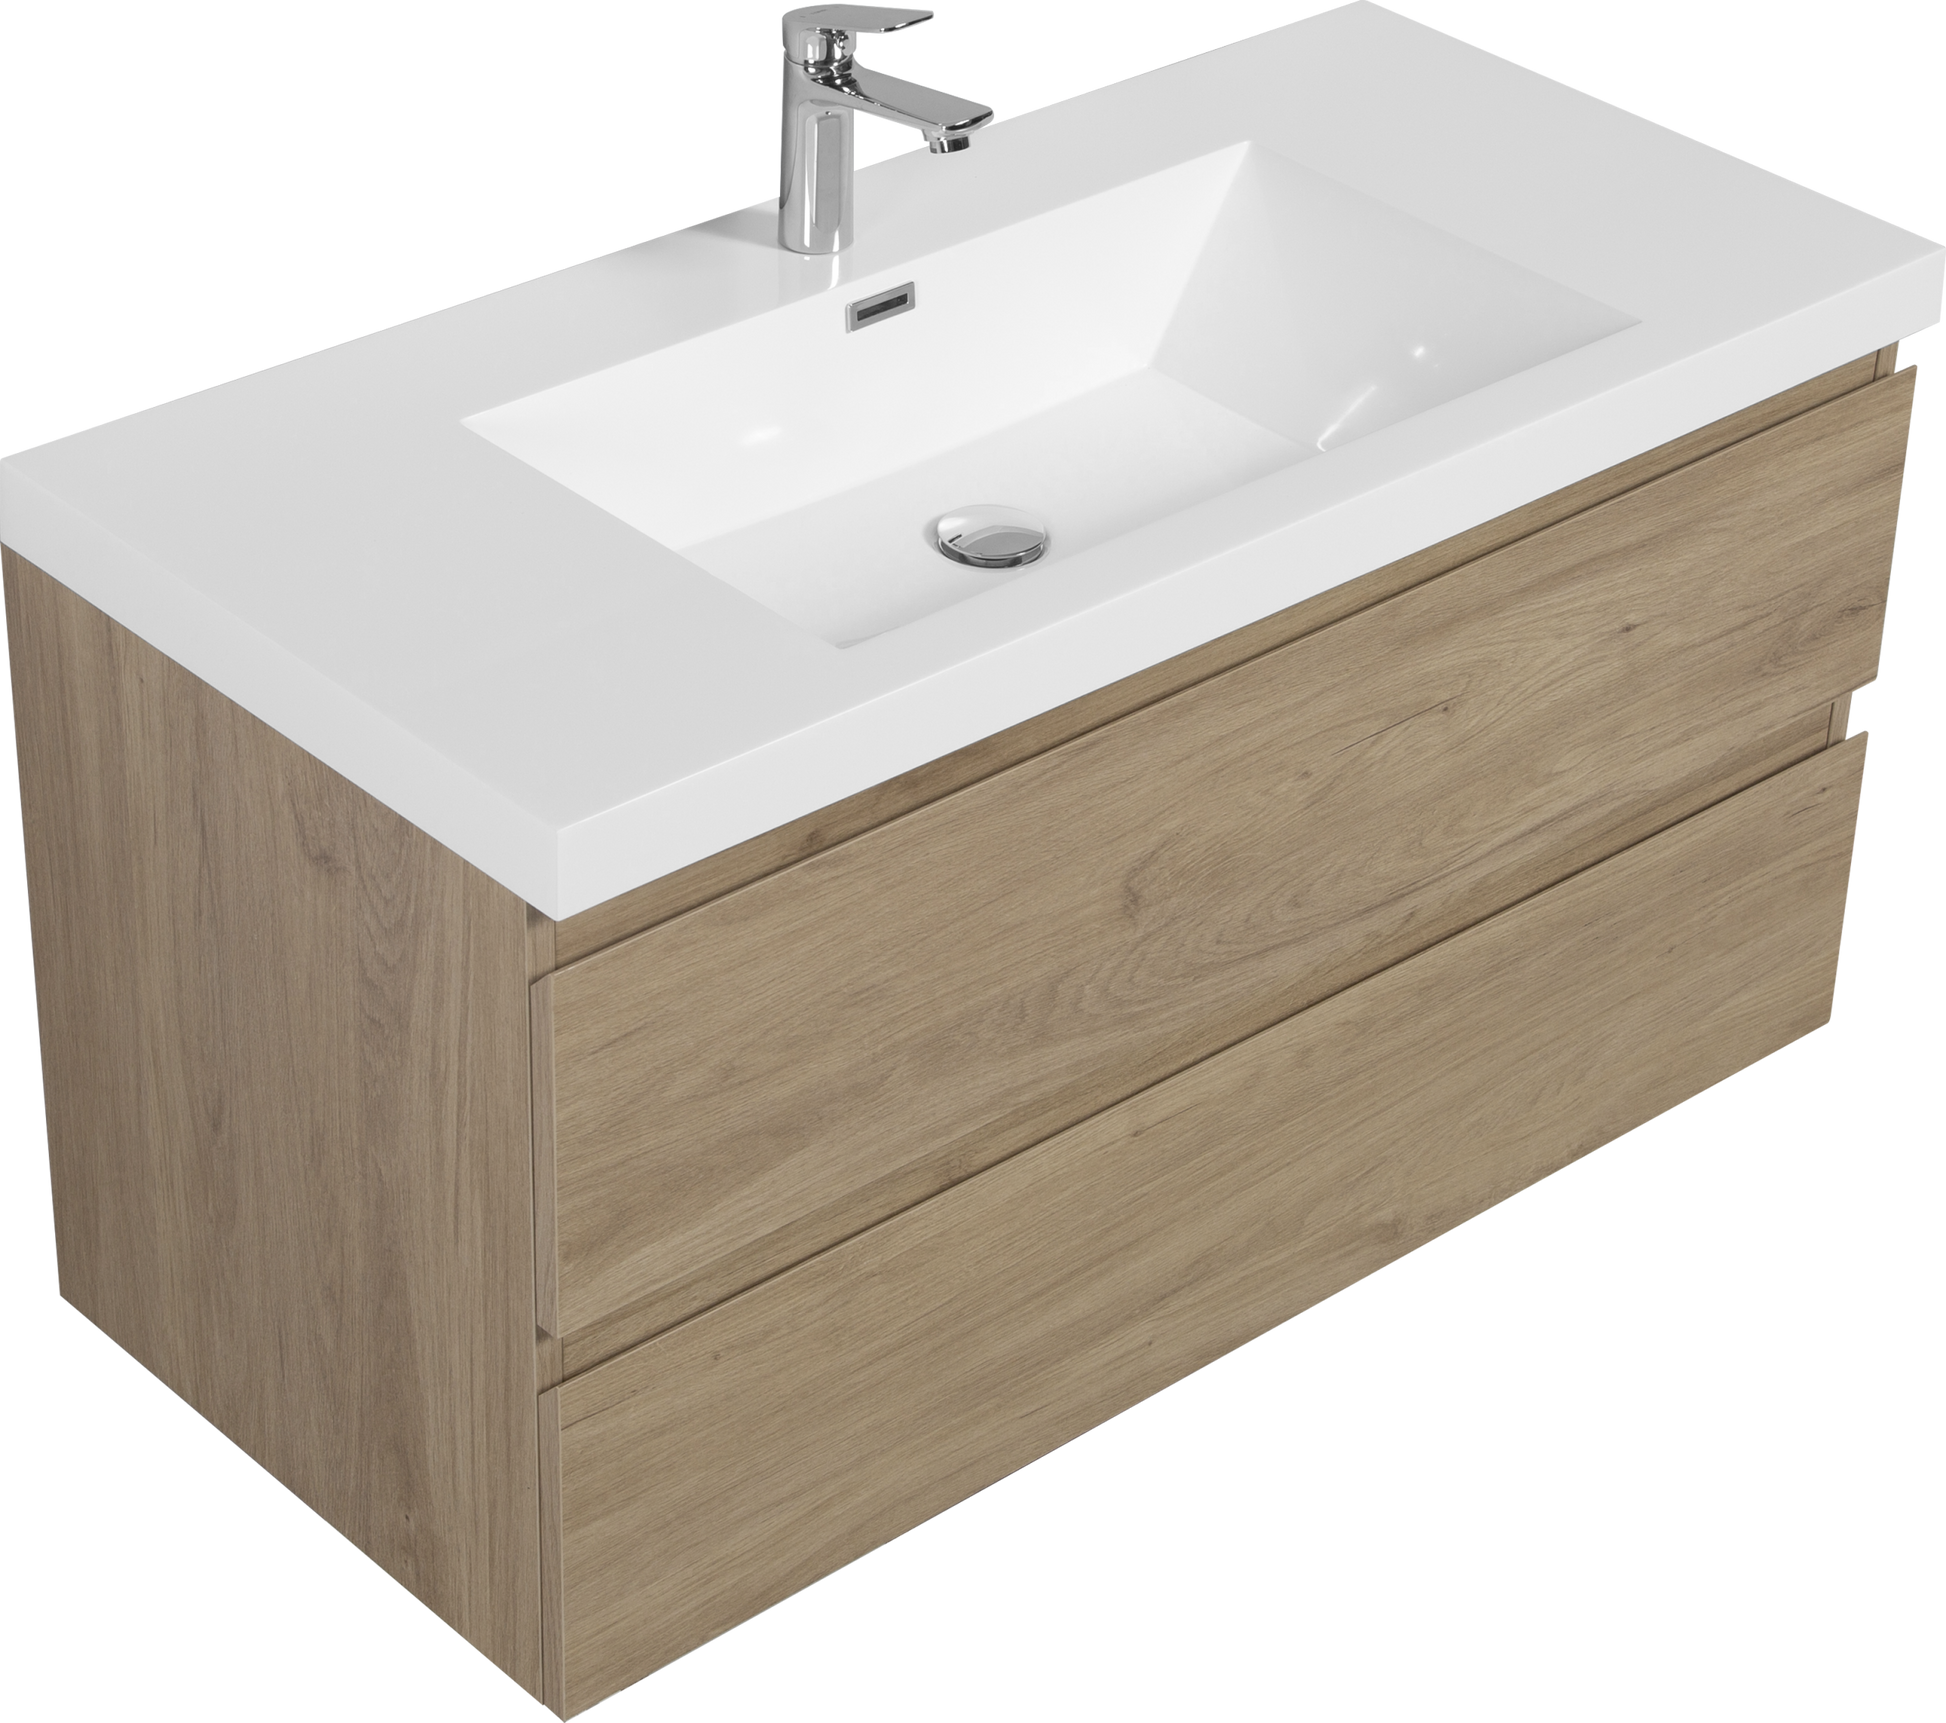 42" Floating Bathroom Vanity with Sink, Modern Wall 2-oak-bathroom-wall mounted-melamine